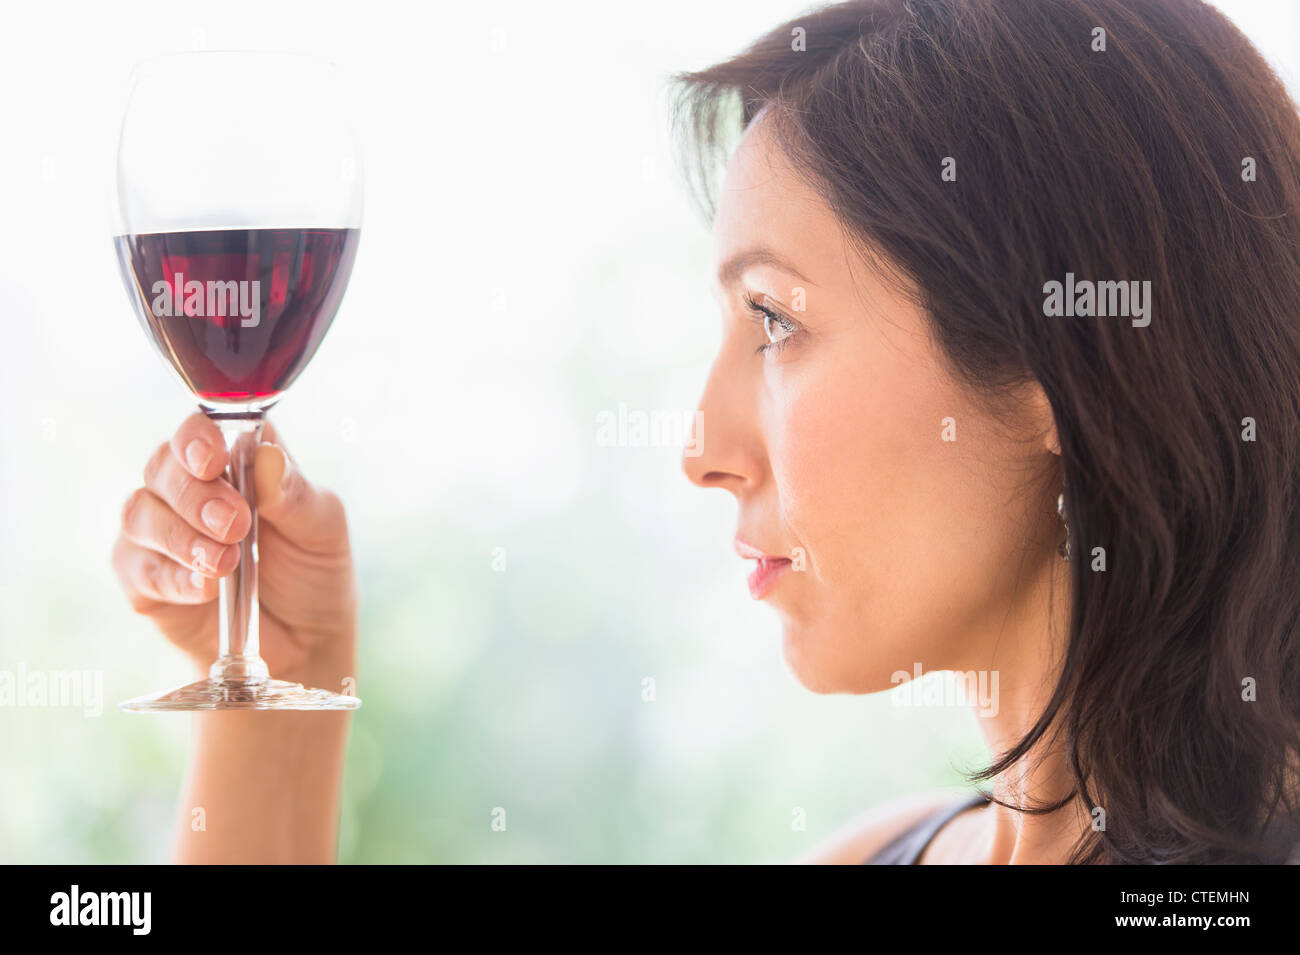 USA, New Jersey, Jersey City, Woman tasting red wine Stock Photo